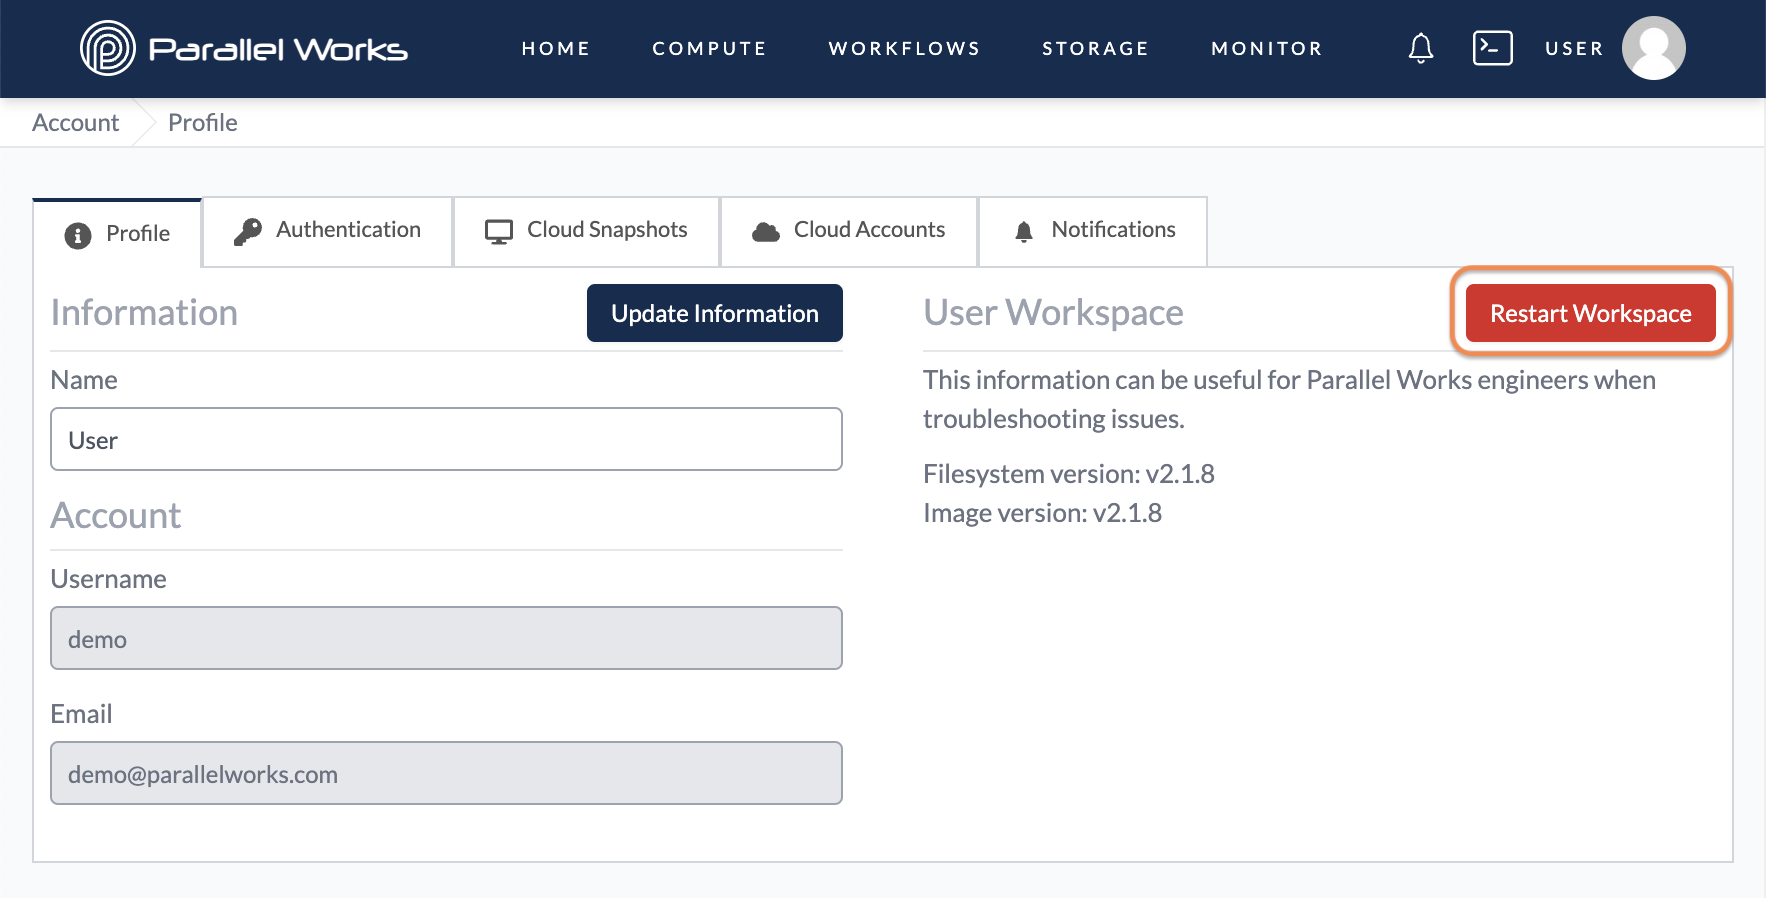 Screenshot of the user clicking the Restart Workspace button.